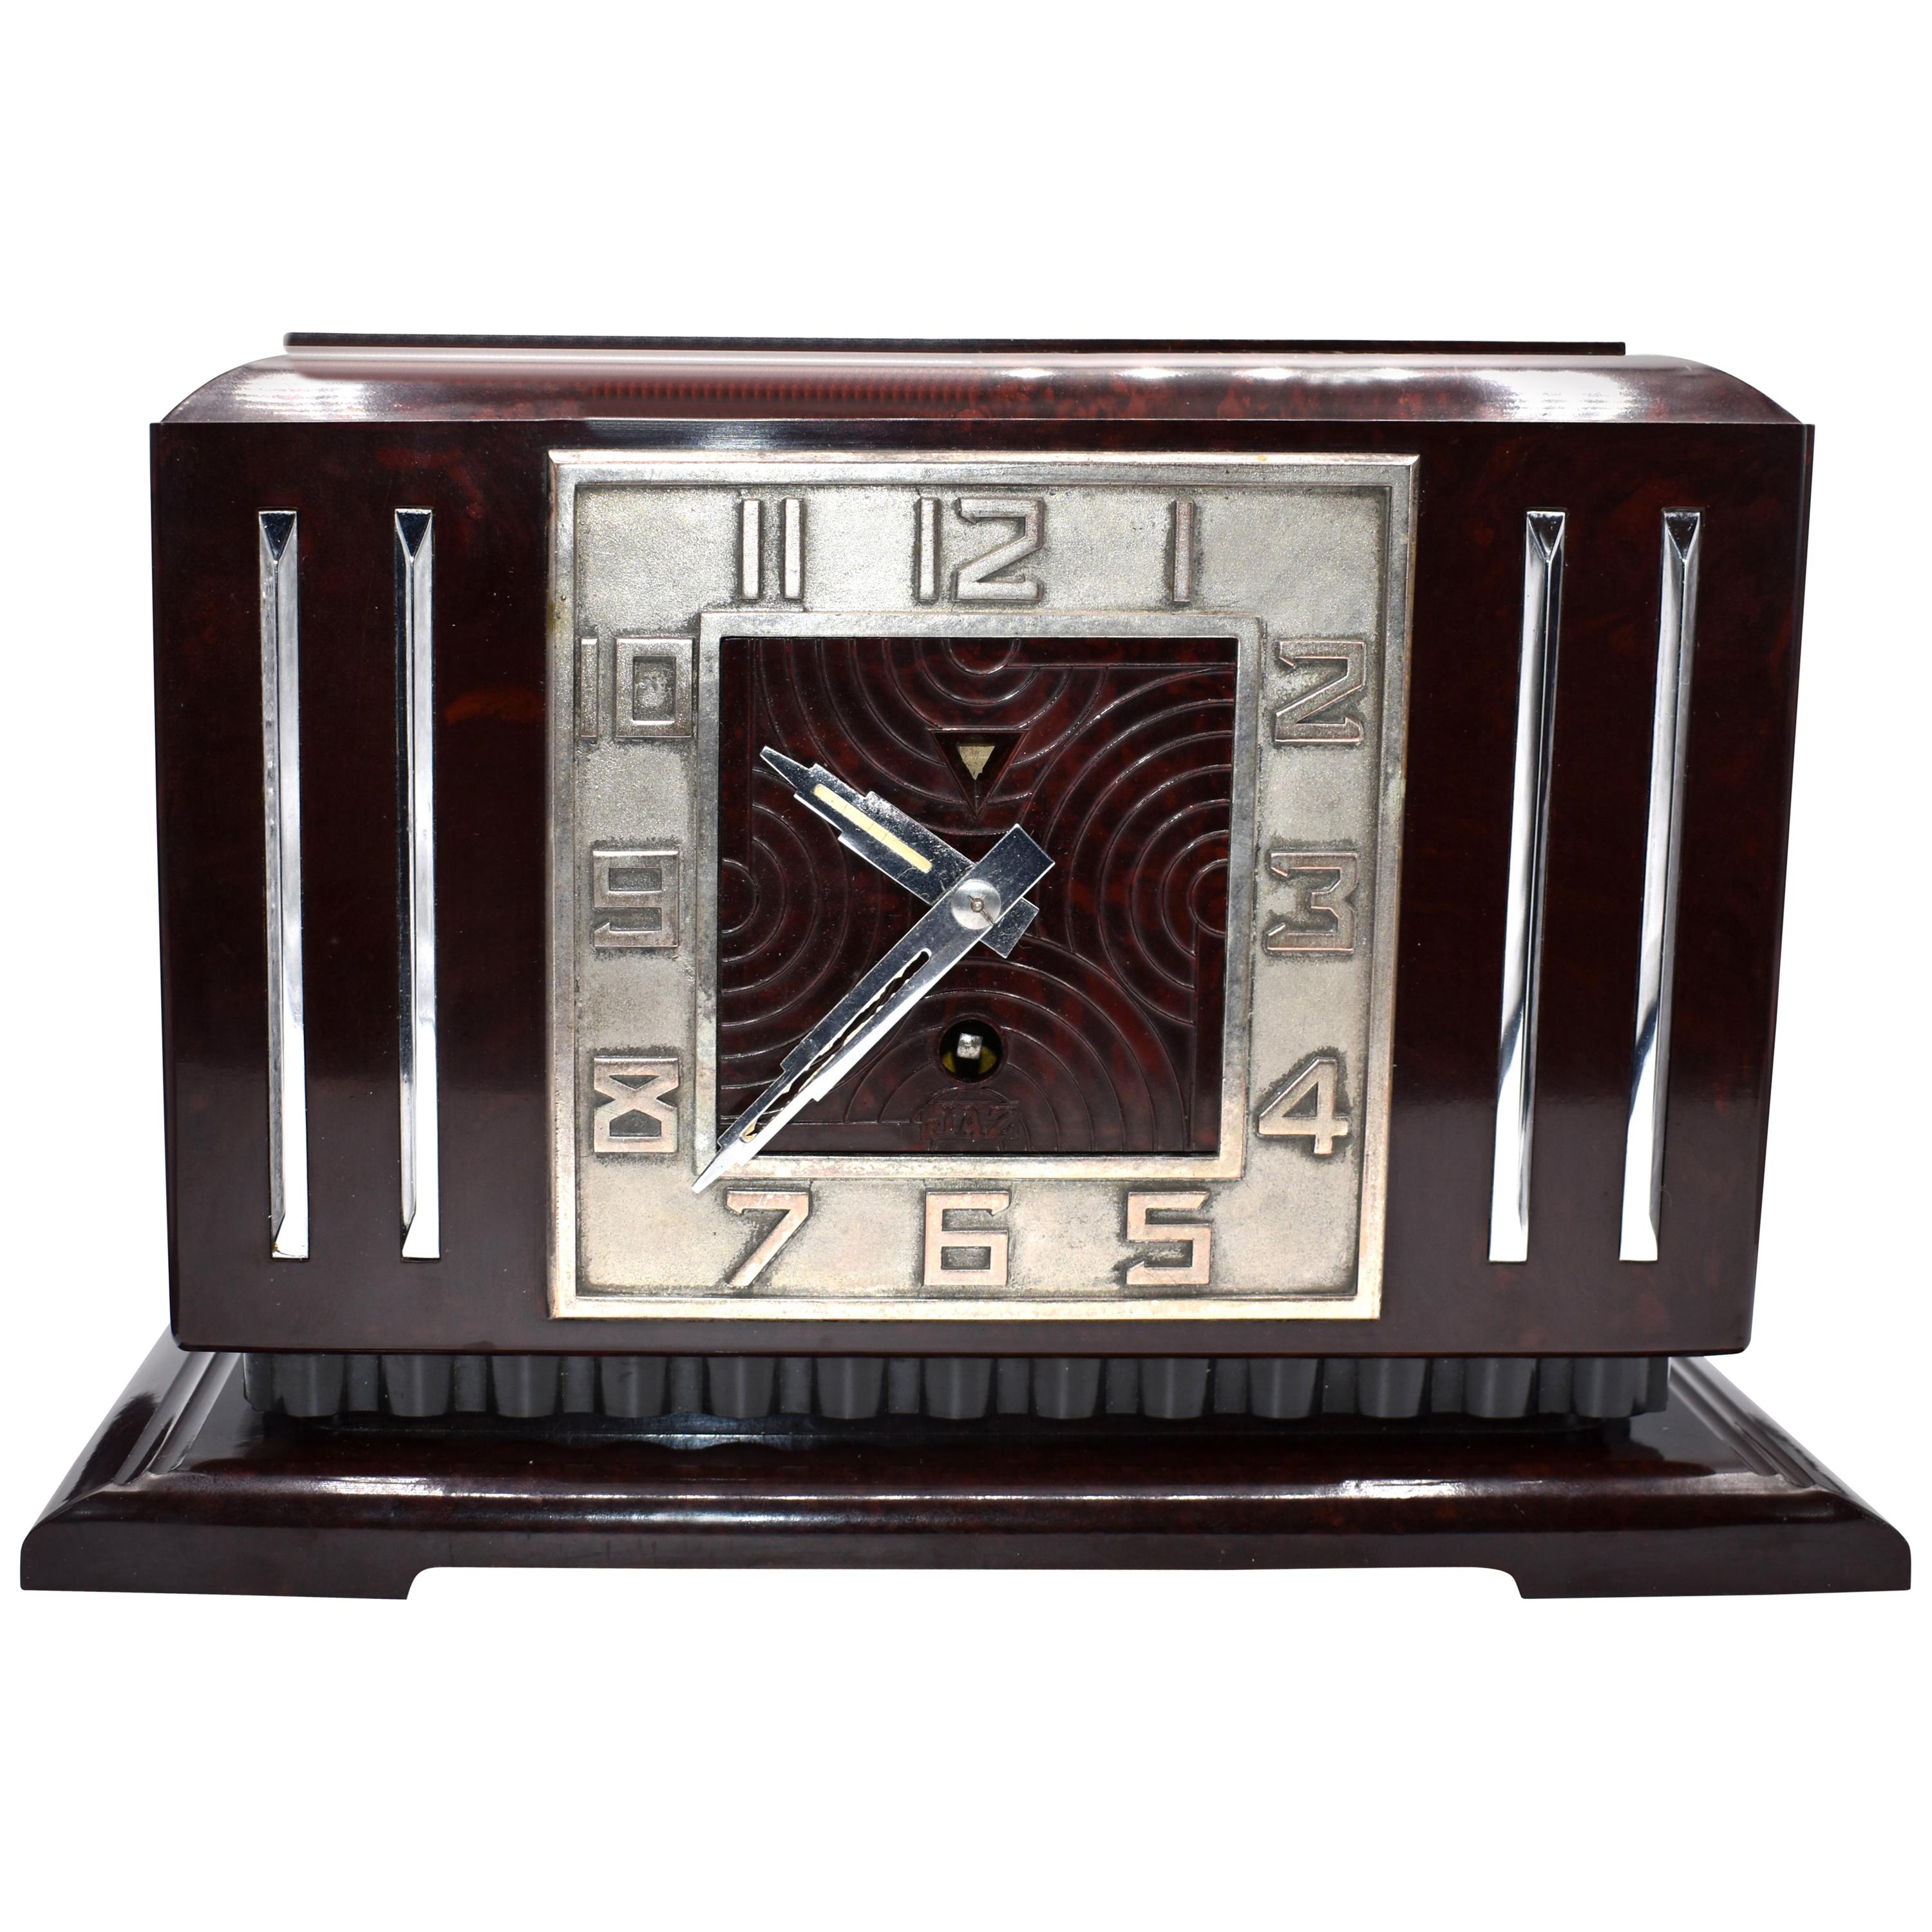 Large Art Deco French Bakelite Mantle Clock by JAZ, circa 1930s